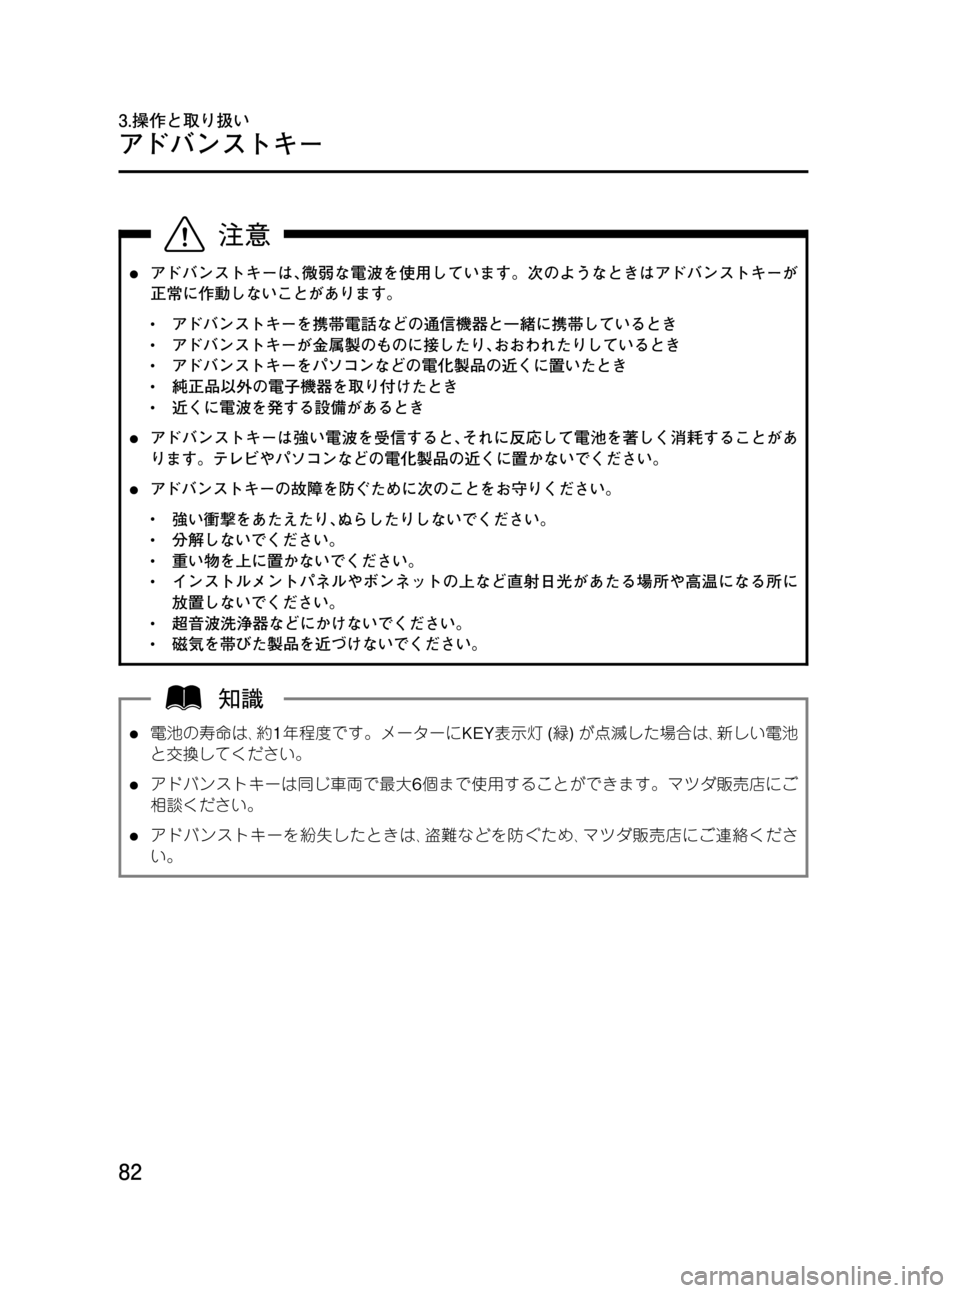 MAZDA MODEL RX 8 2008  取扱説明書 (in Japanese) Black plate (82,1)
lアドバンストキーは､微弱な電波を使用しています。次のようなときはアドバンストキーが
正常に作動しないことがあります。
lアド